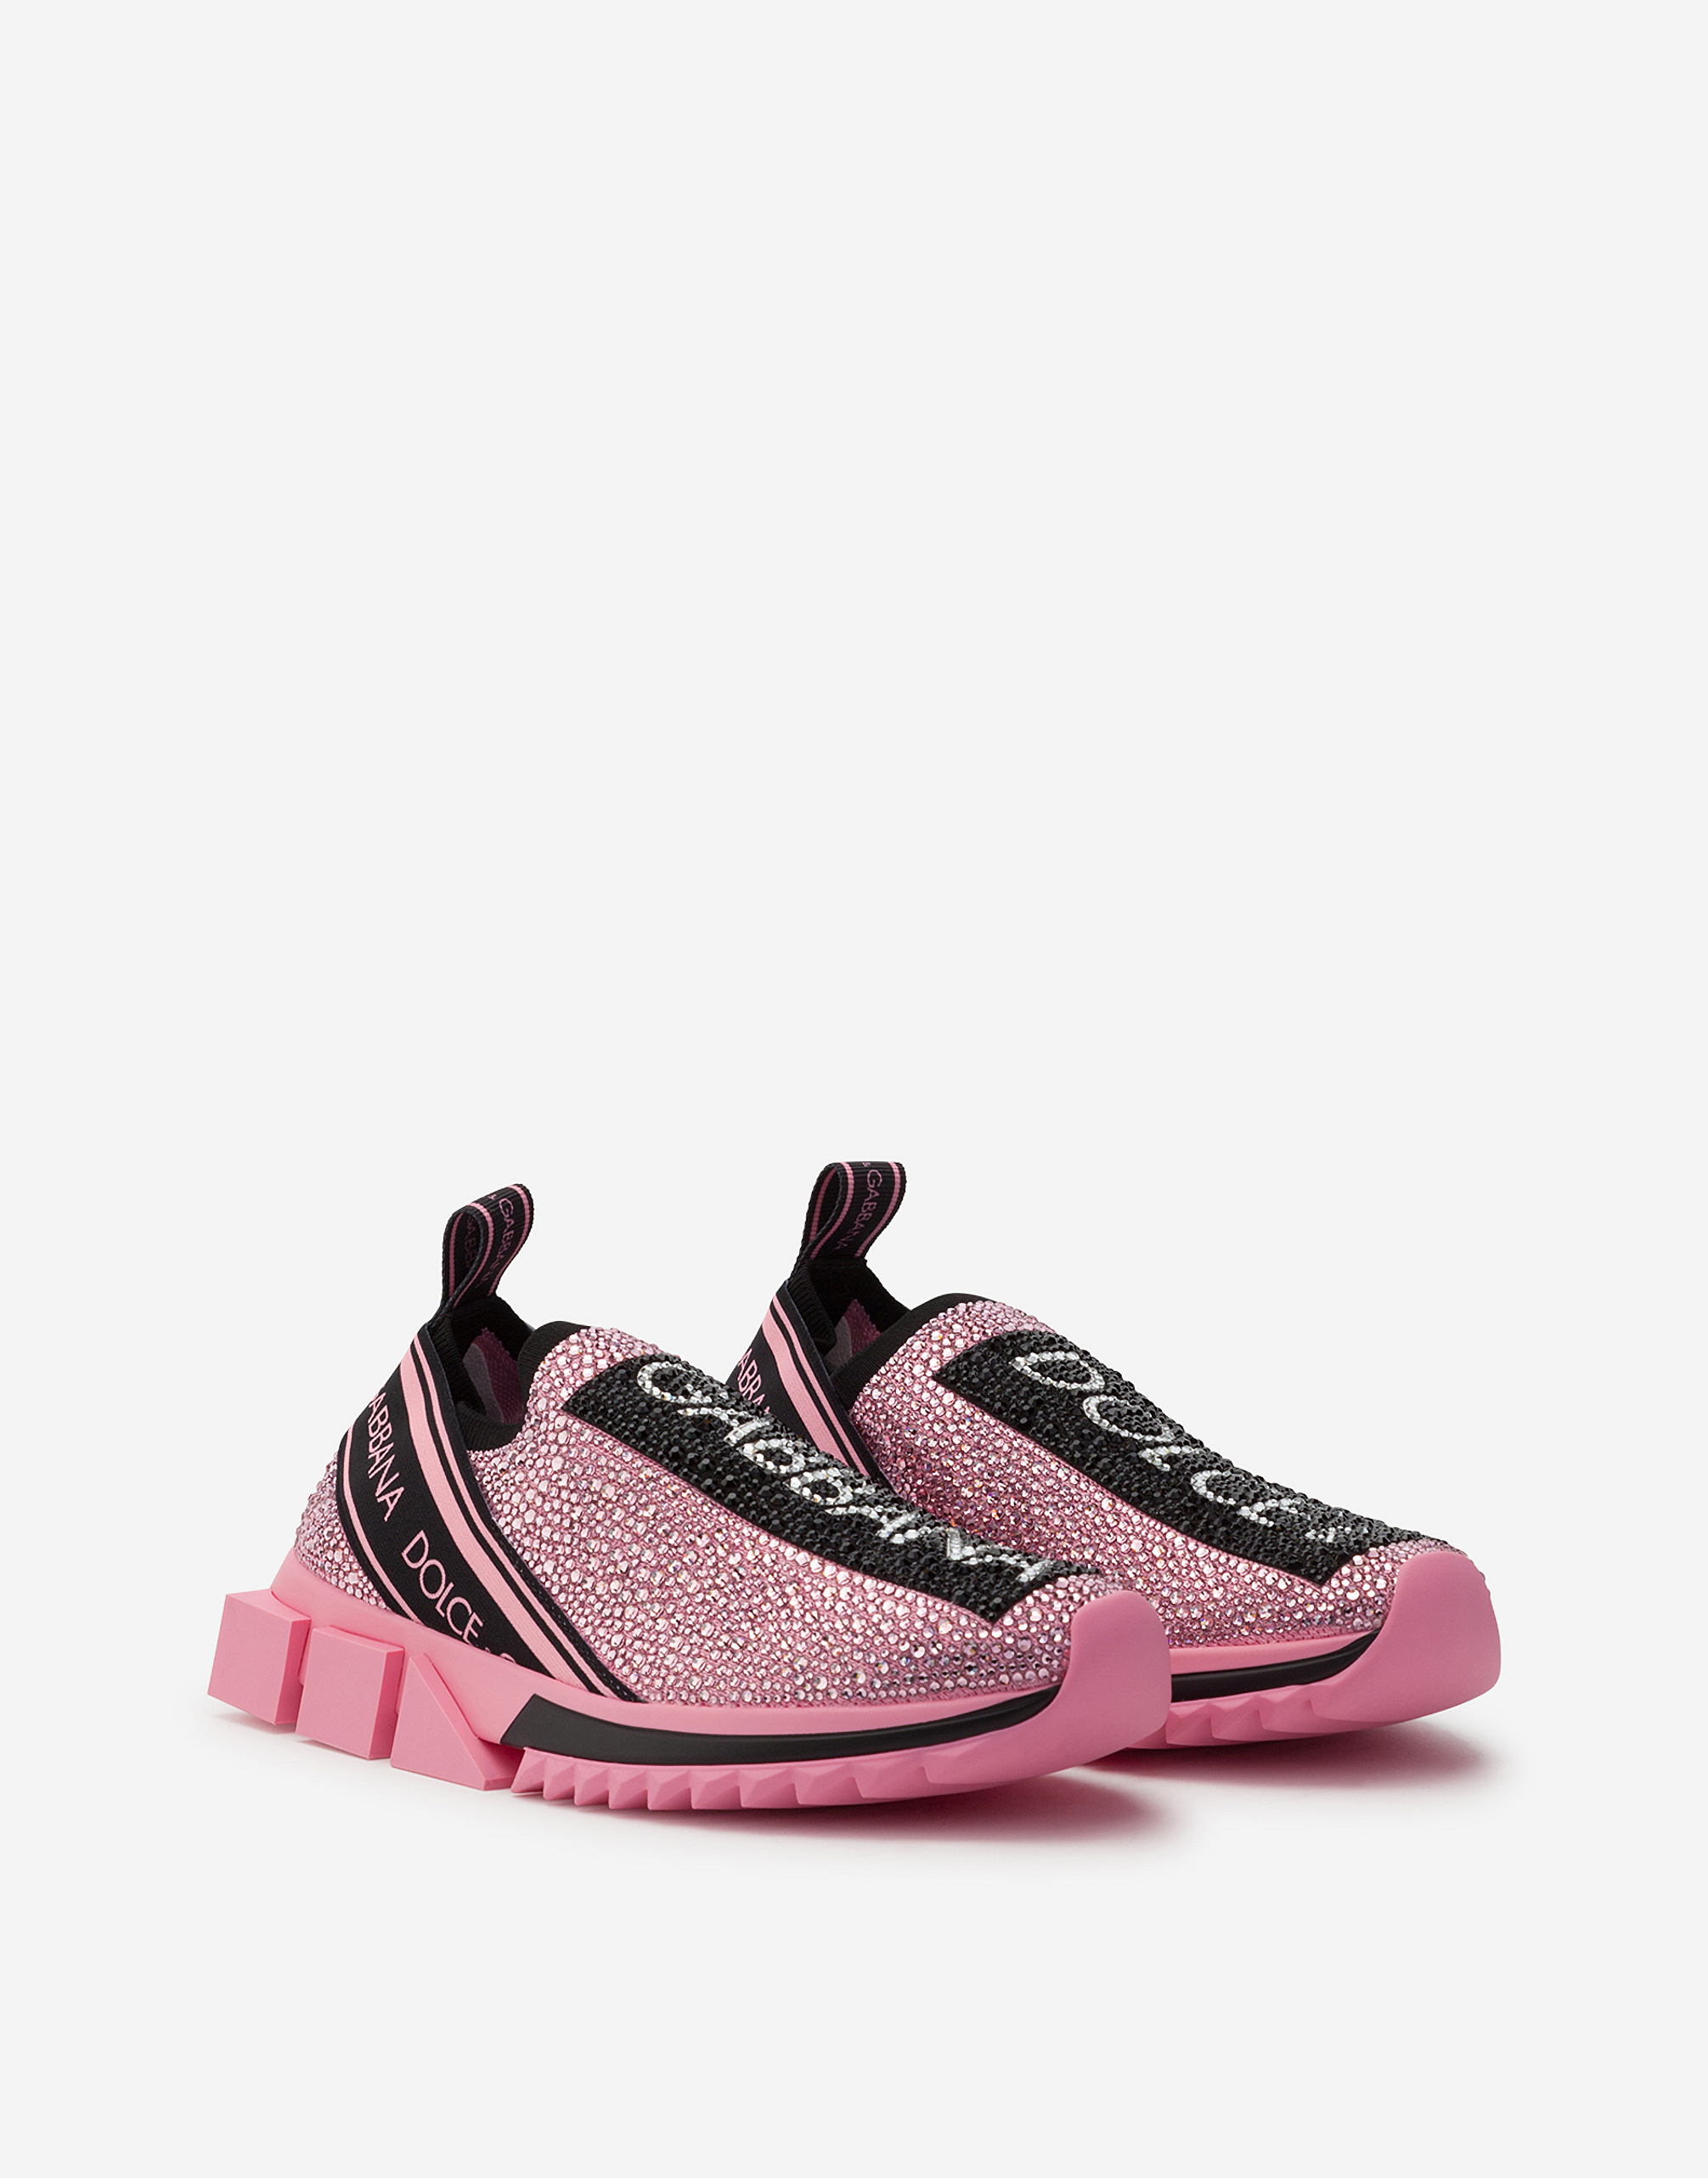 dolce & gabbana shoes pink